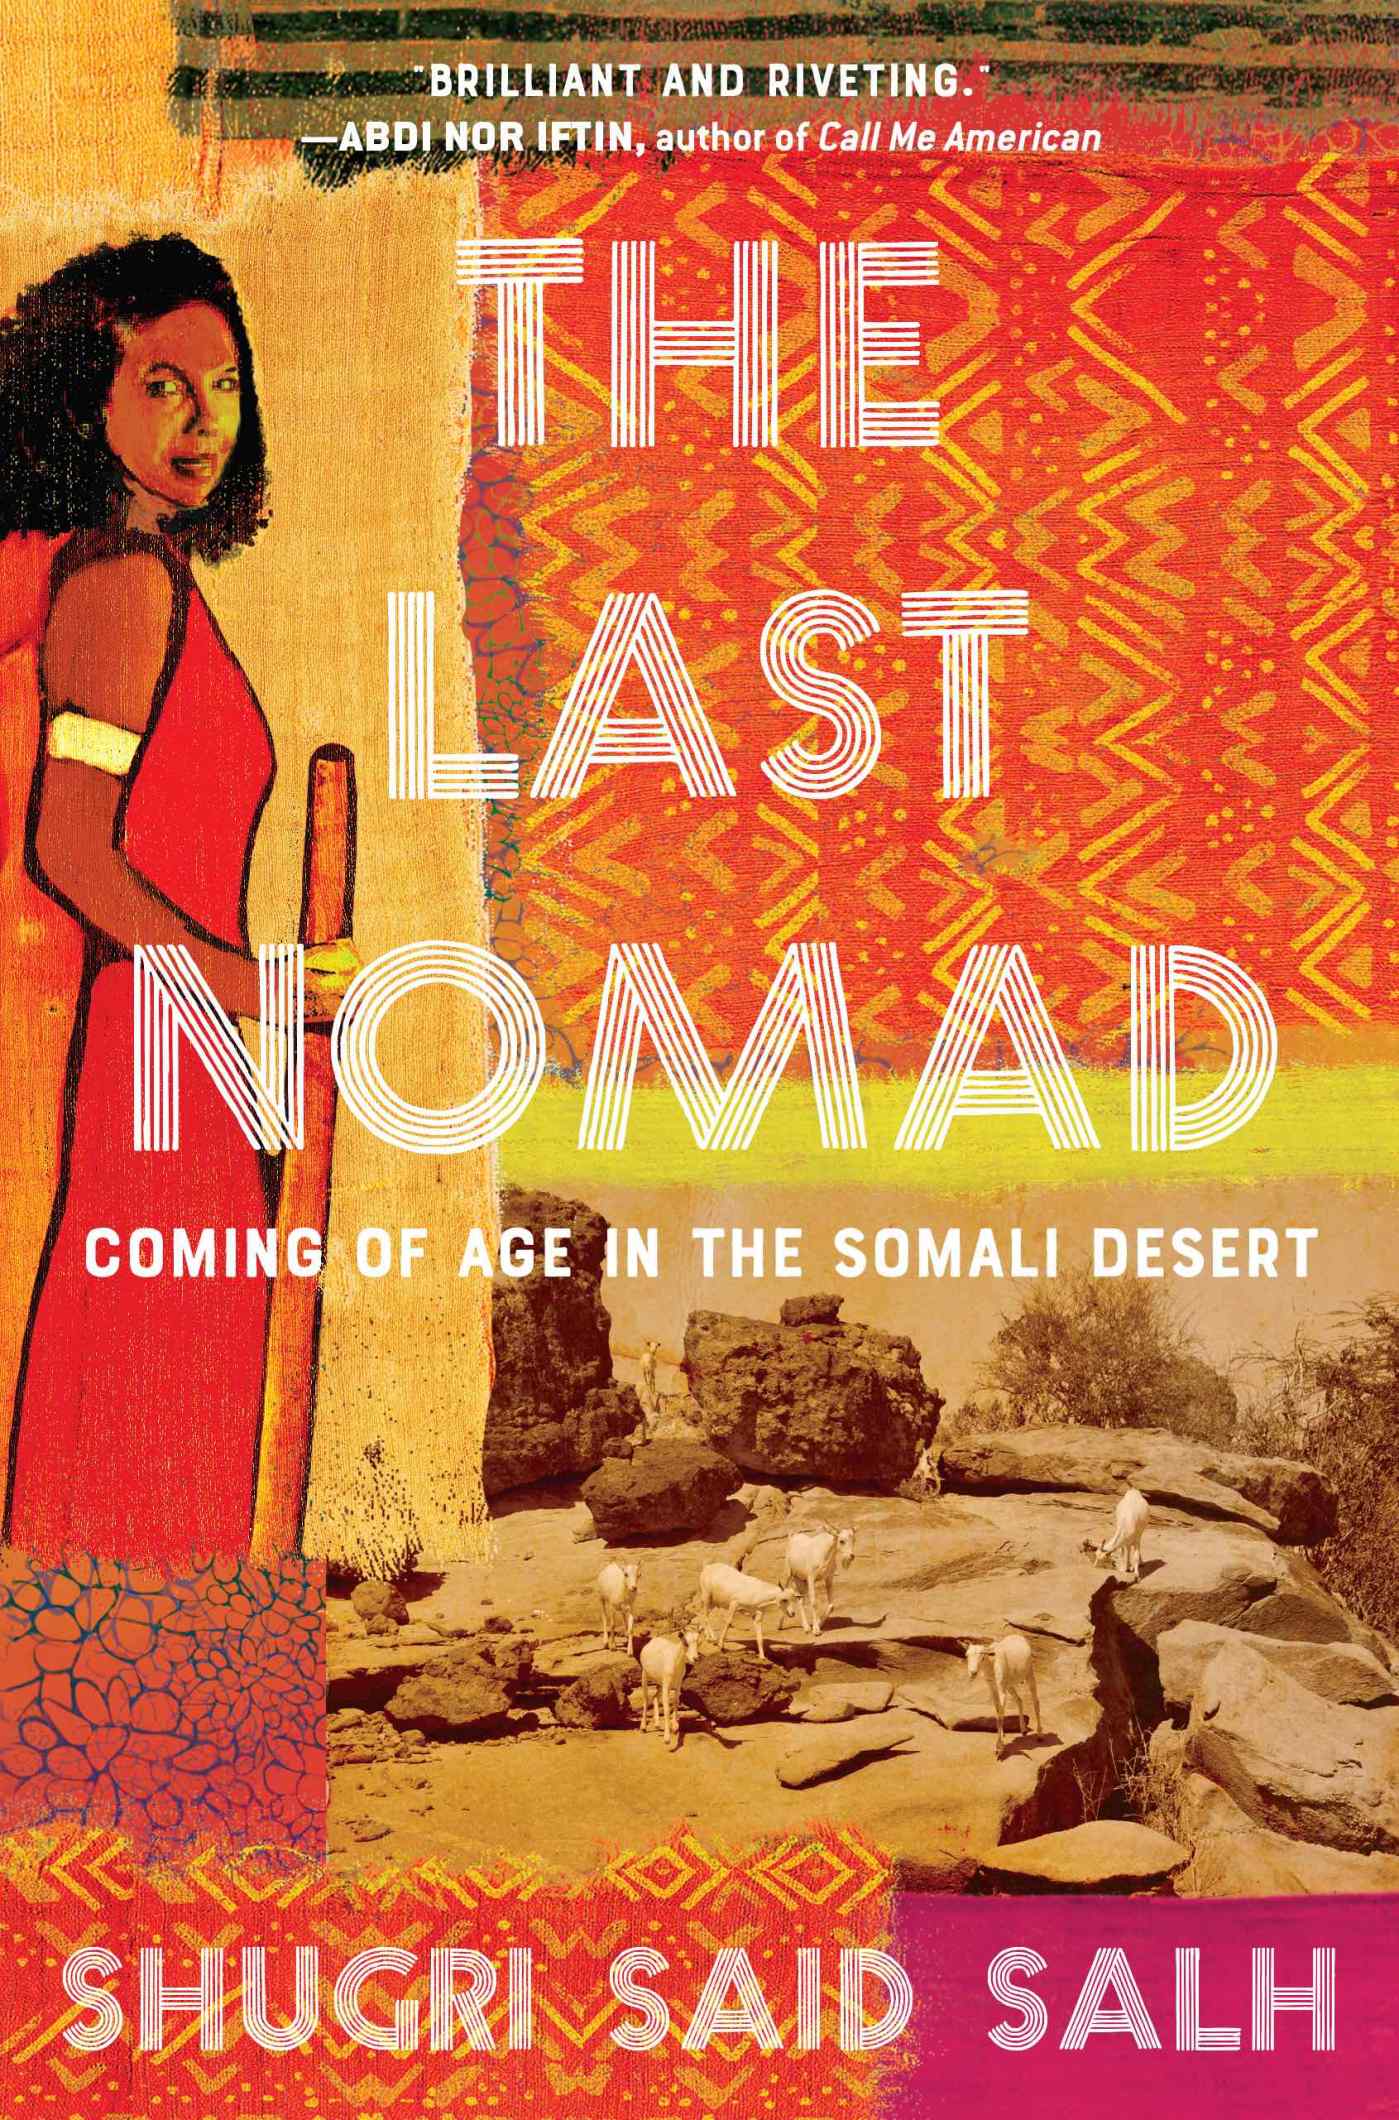 Shugri Said Salh - The Last Nomad